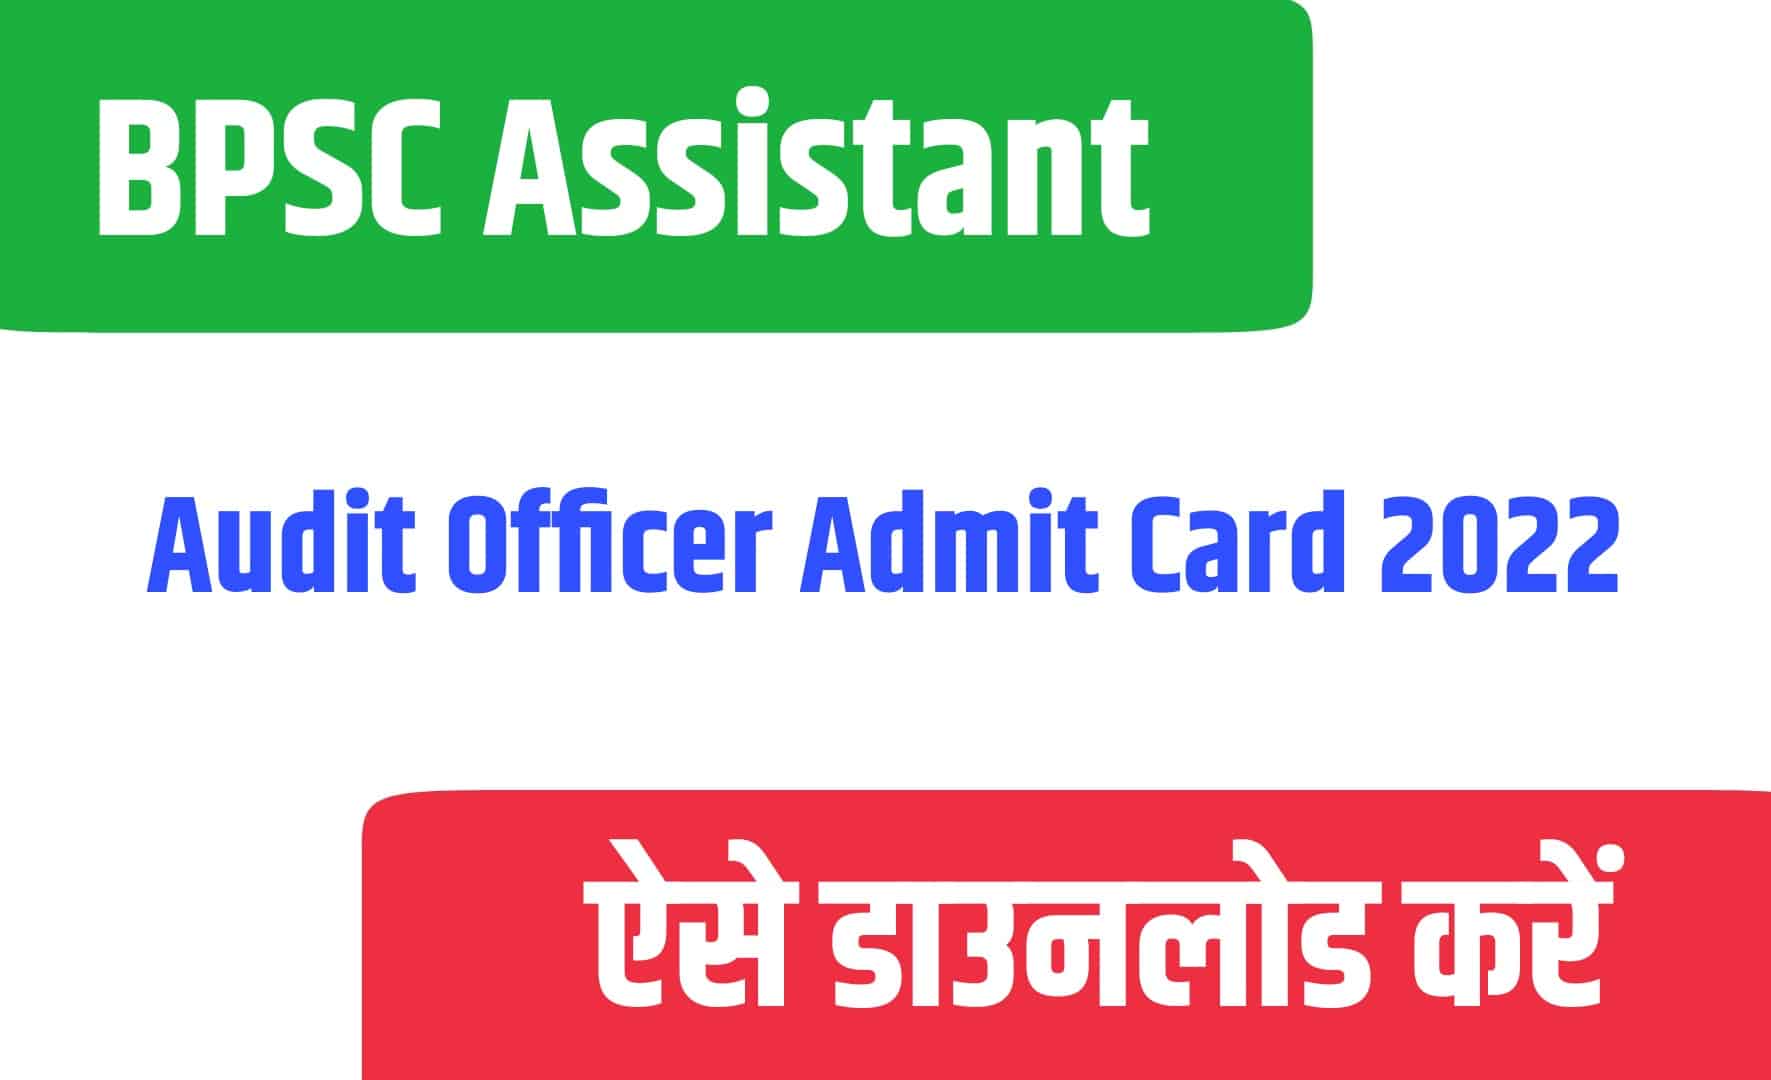 BPSC Assistant Audit Officer Admit Card 2022